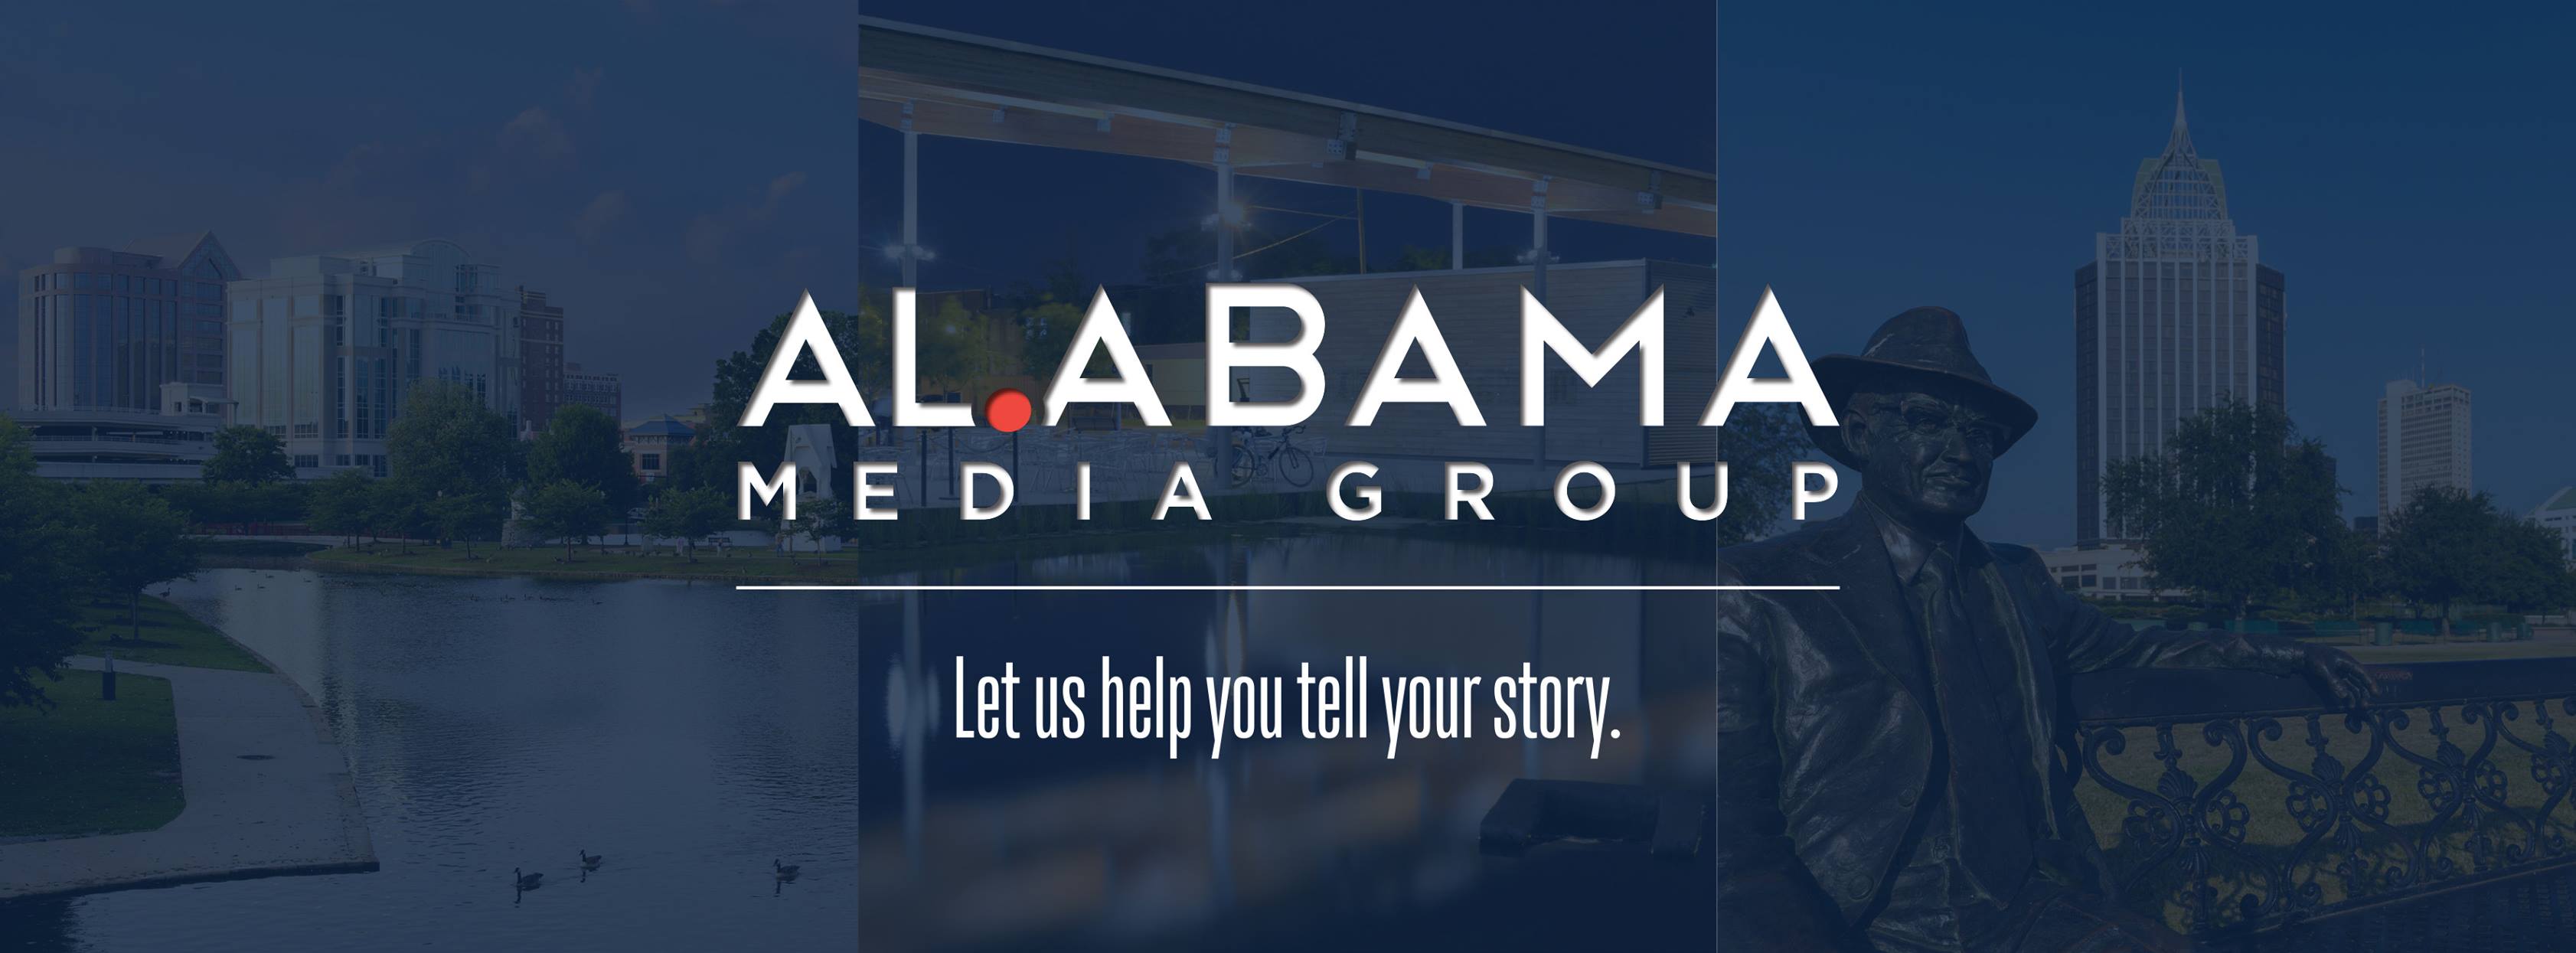 Alabama Media Group